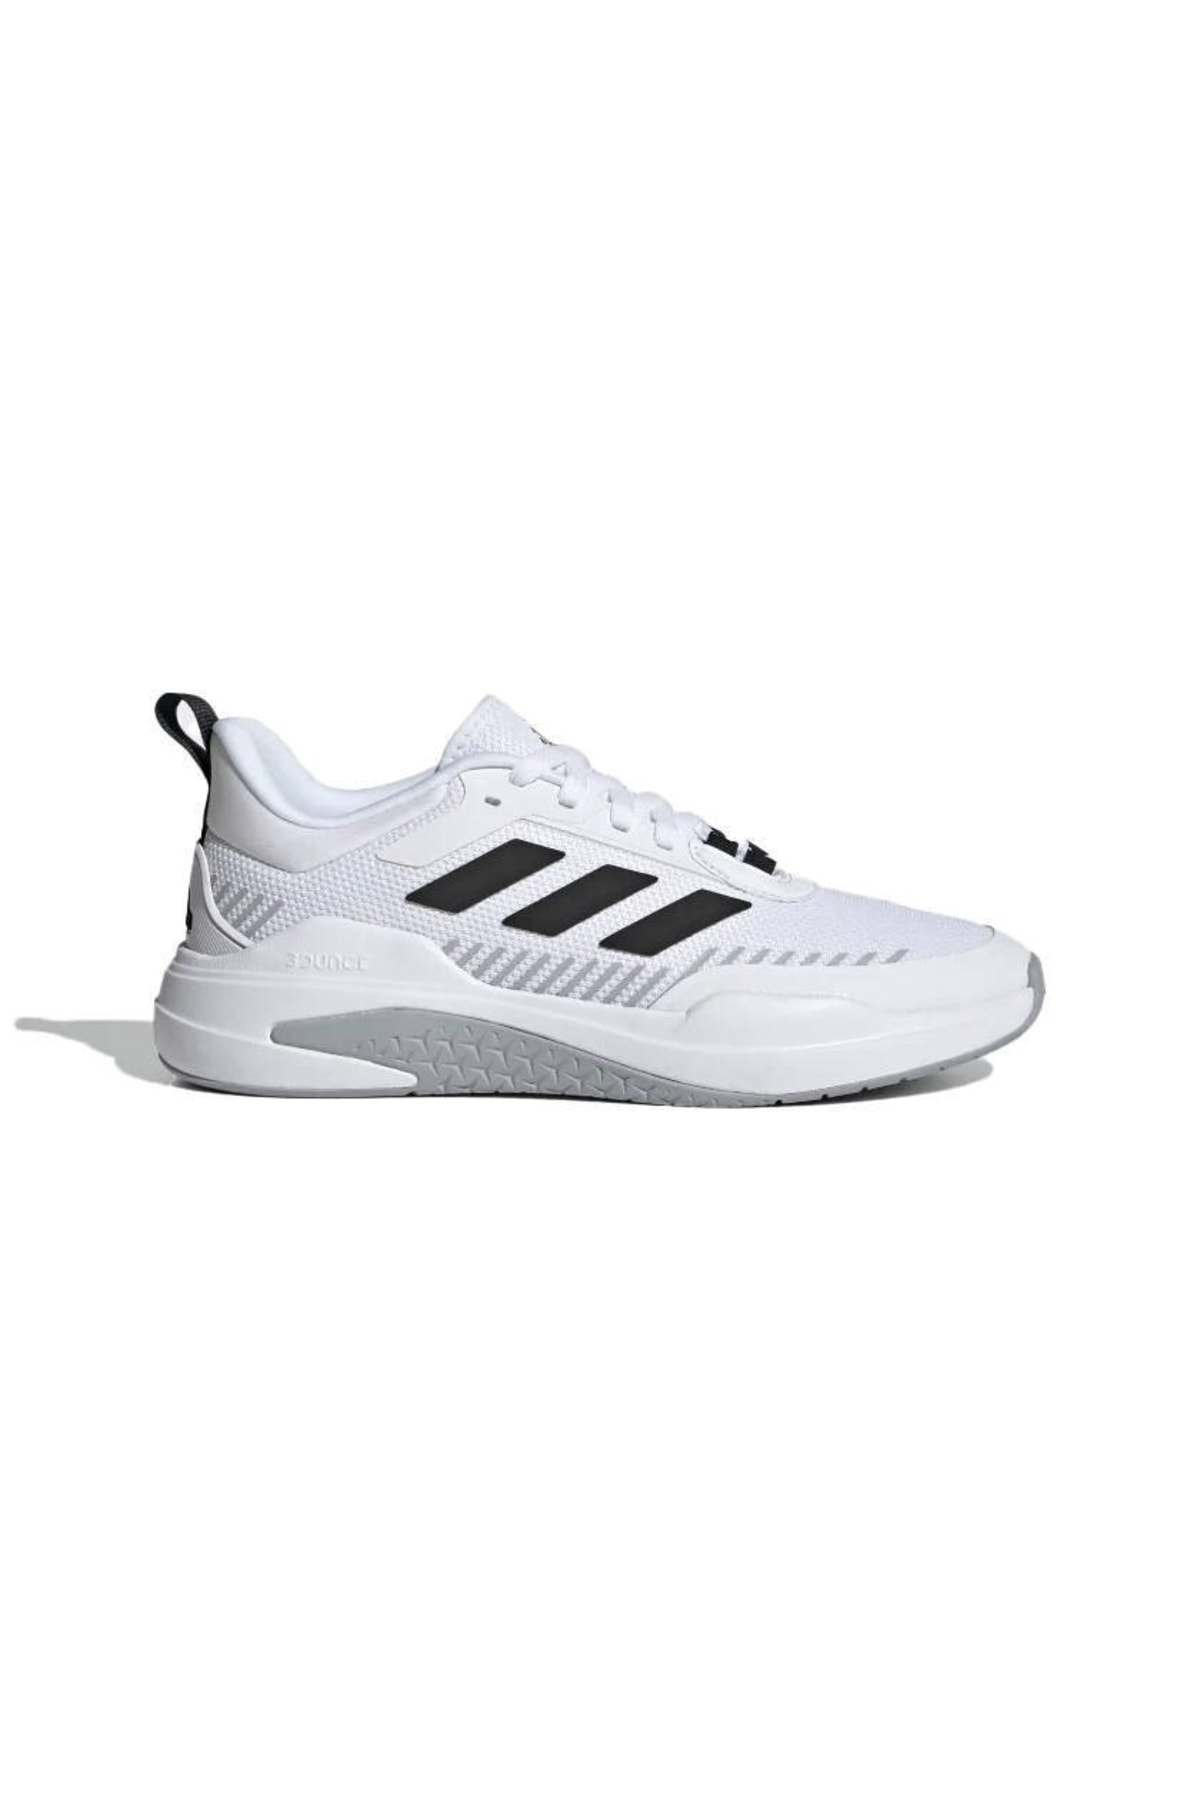 adidas Trainer V Erkek Koşu Ayakkabısı Gx0733